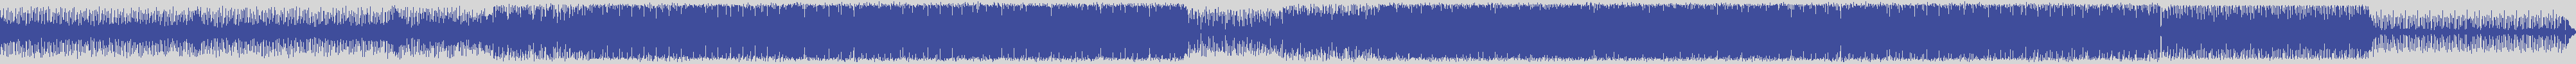 noclouds_chillout [NOC137] The Twisters - Urdoma [Original Mix] audio wave form